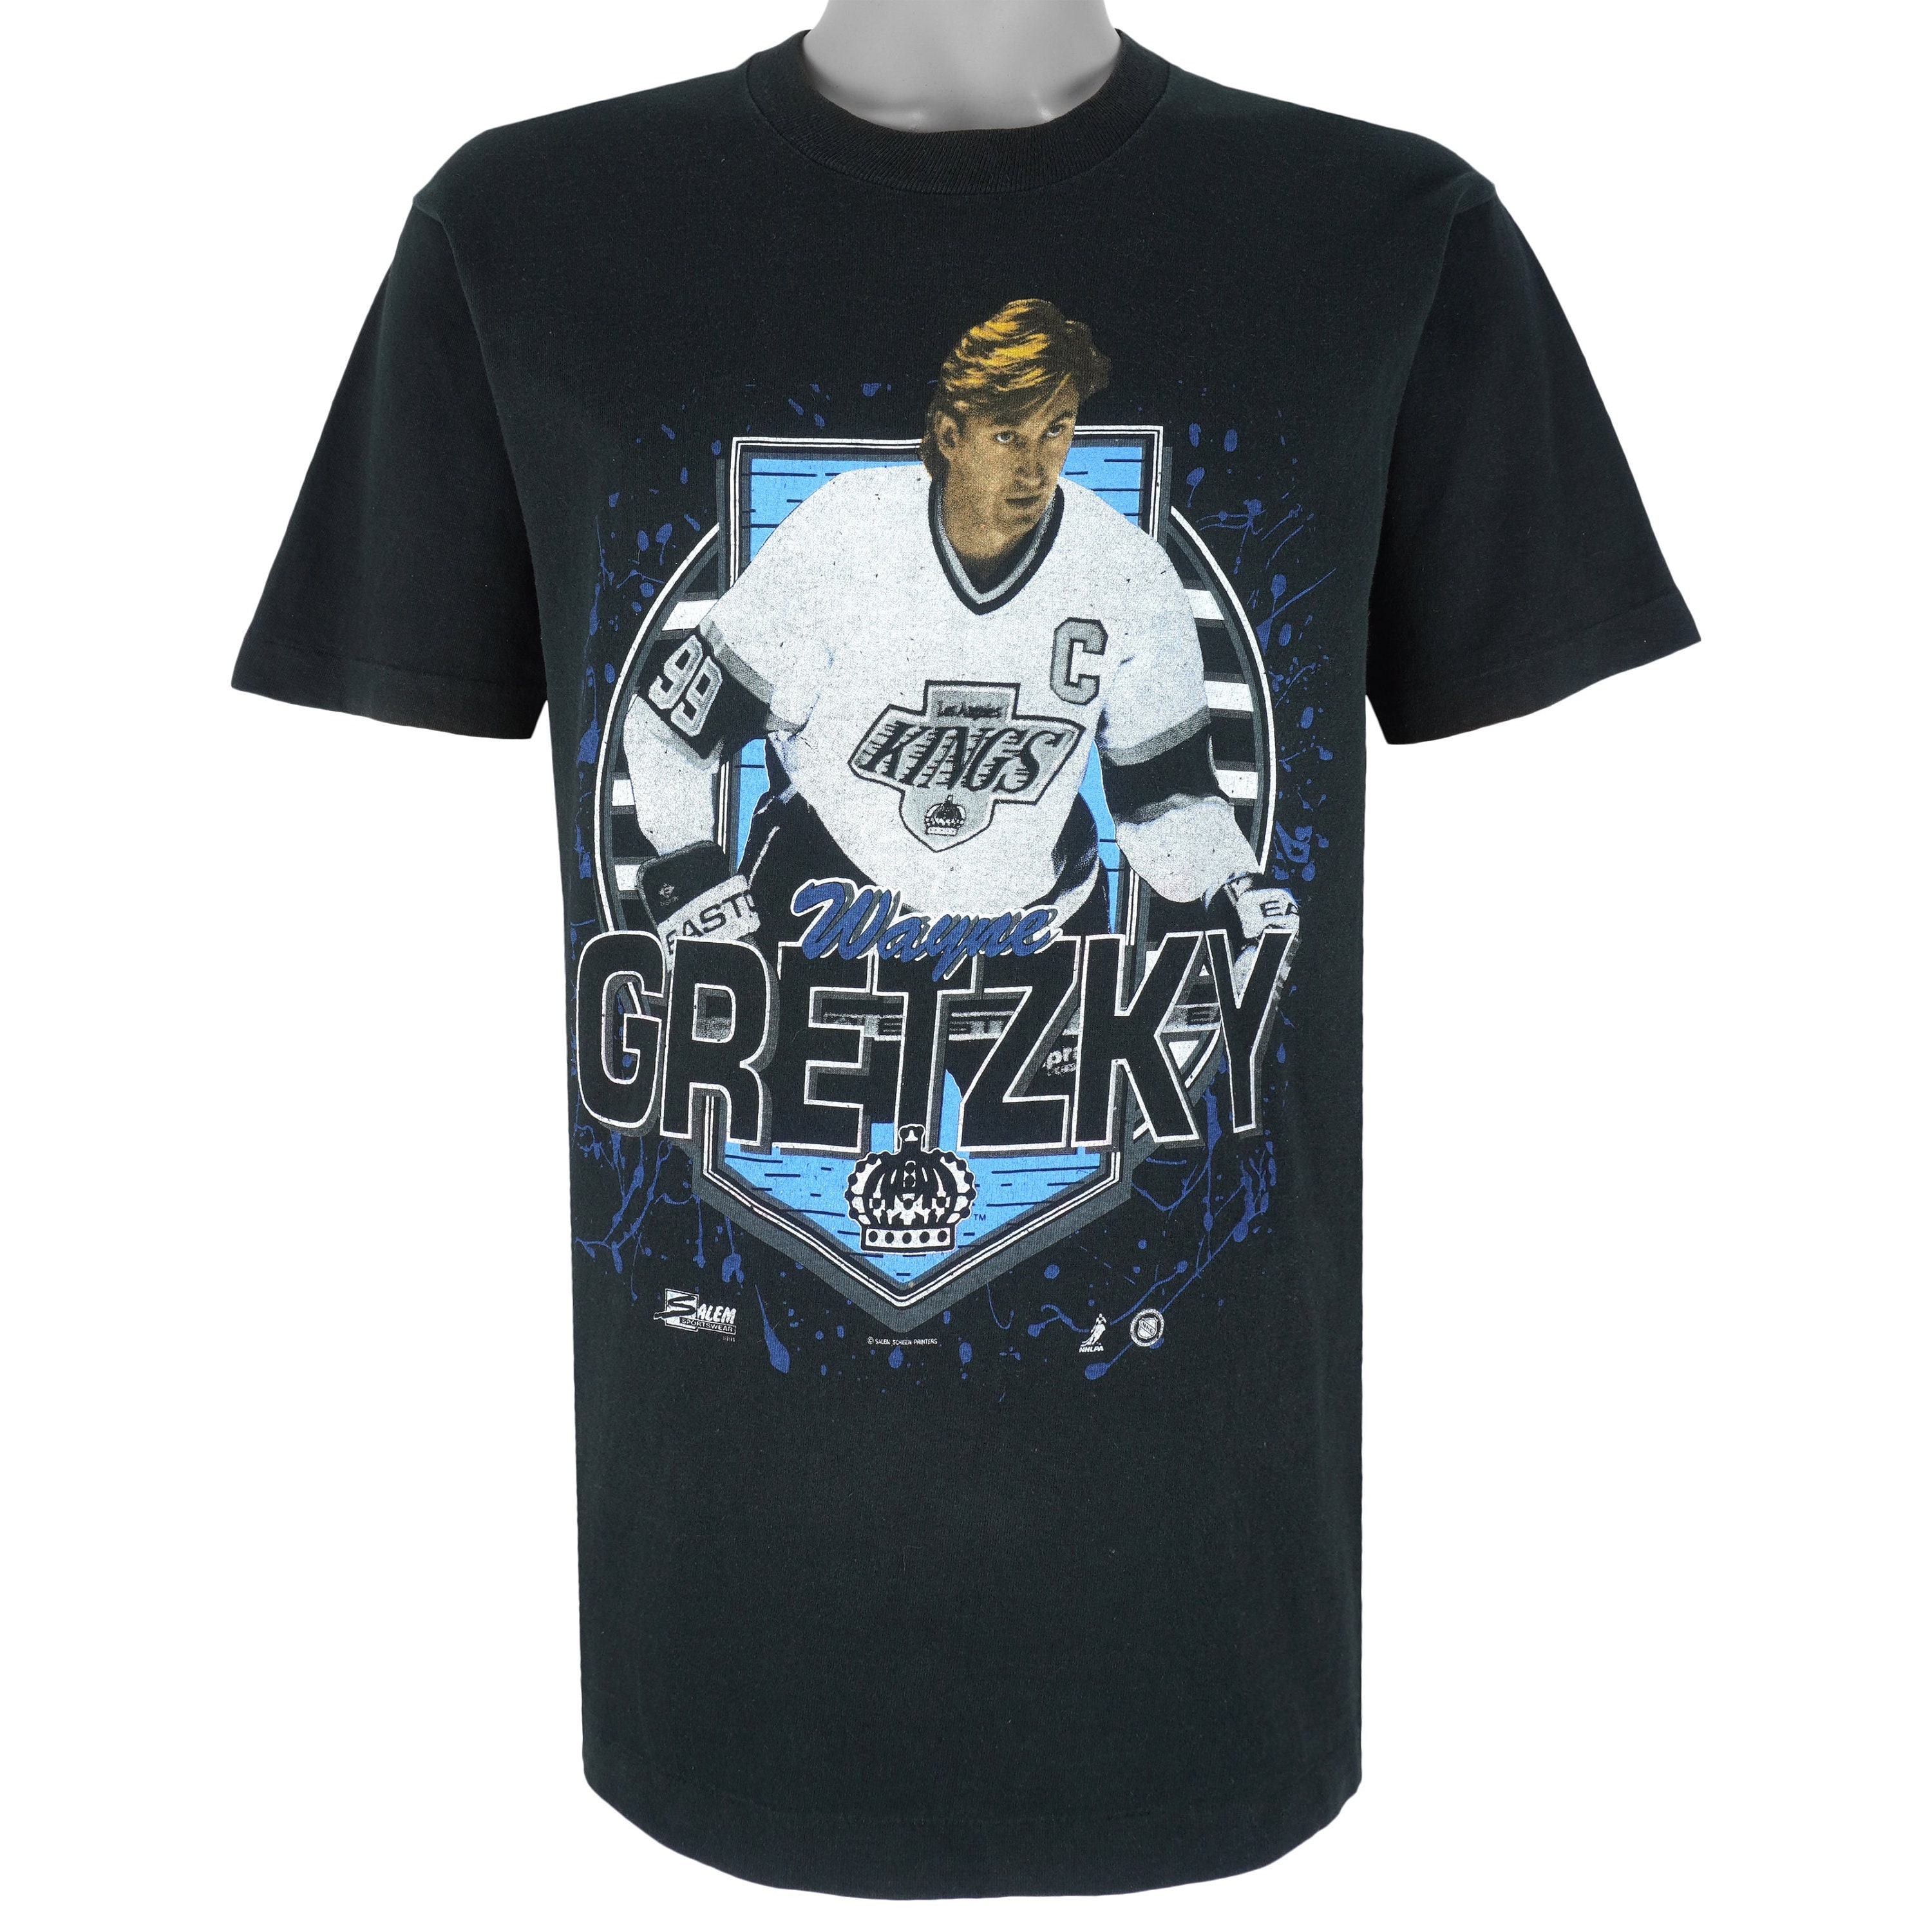 Wayne Gretzky The Great One T-Shirt - Yesweli